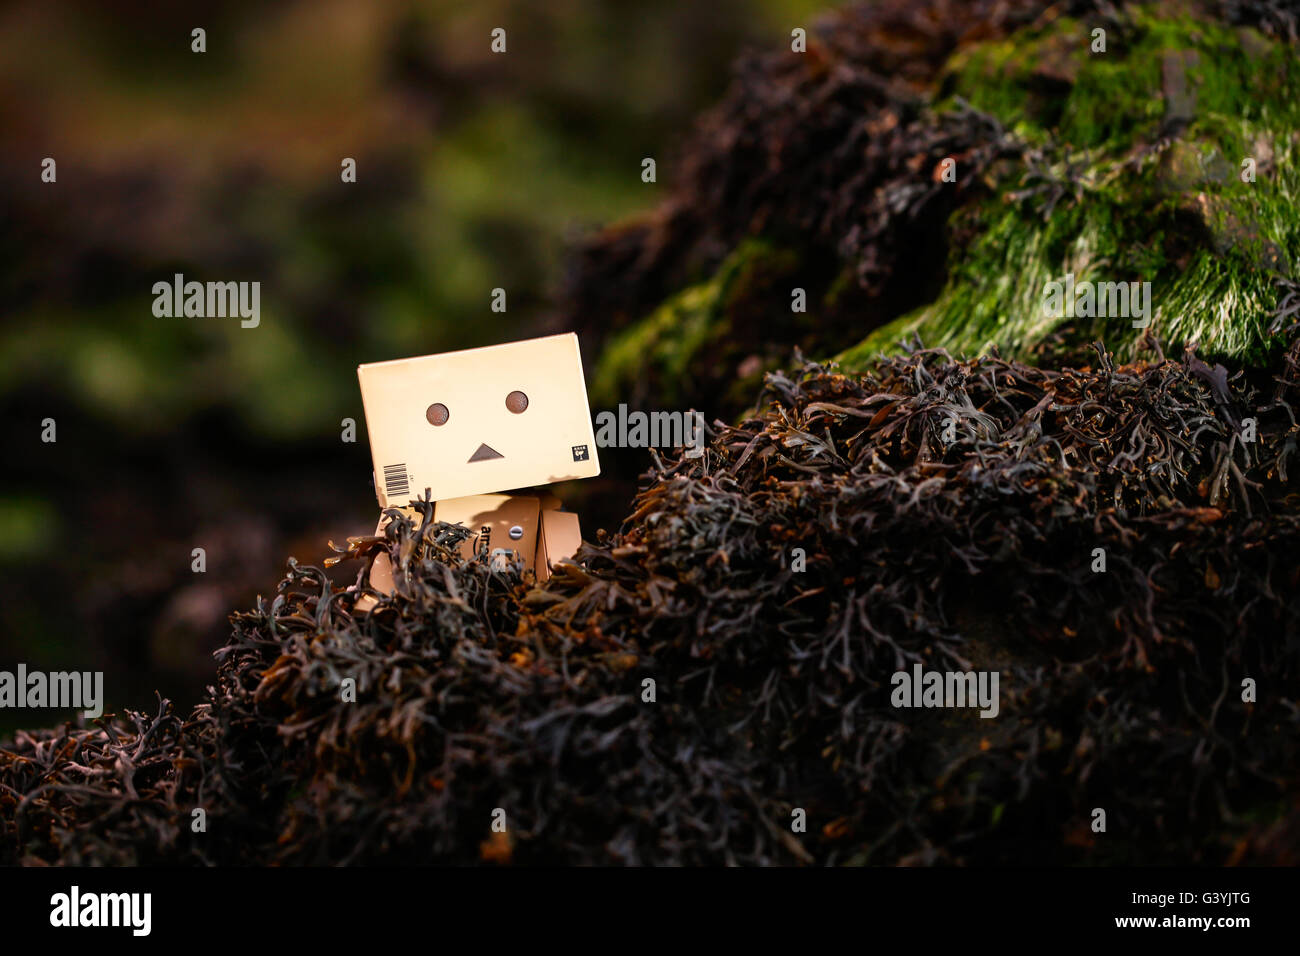 A Danbo Danboard fictional Robot Character hiding amongst seaweed on a rocky beach Stock Photo